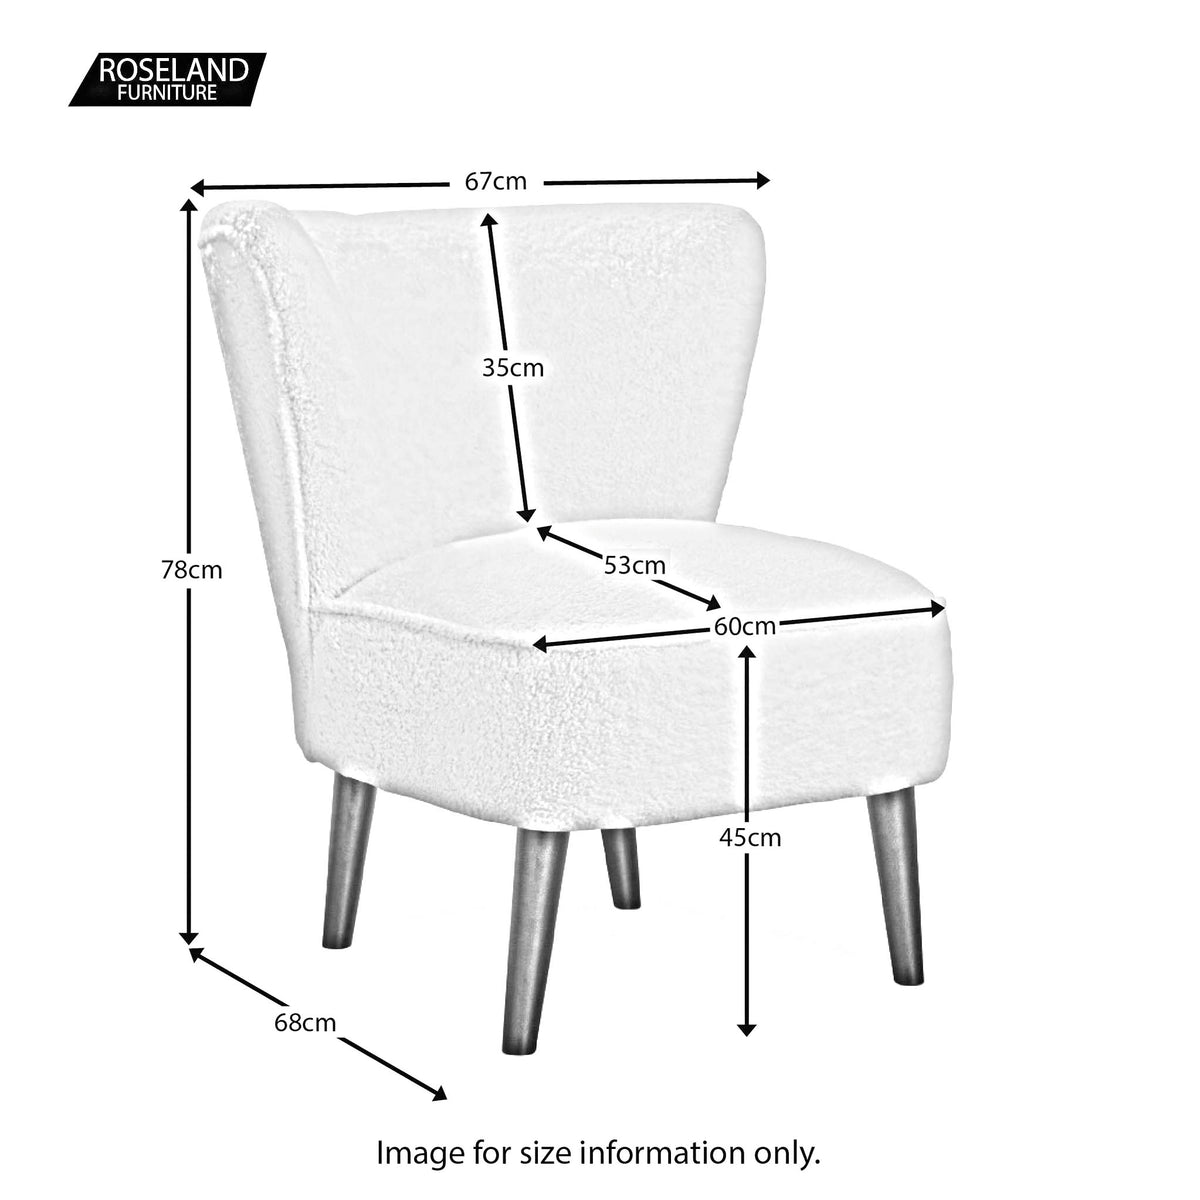 Malmesbury Teddy Accent Chair - Size Guide